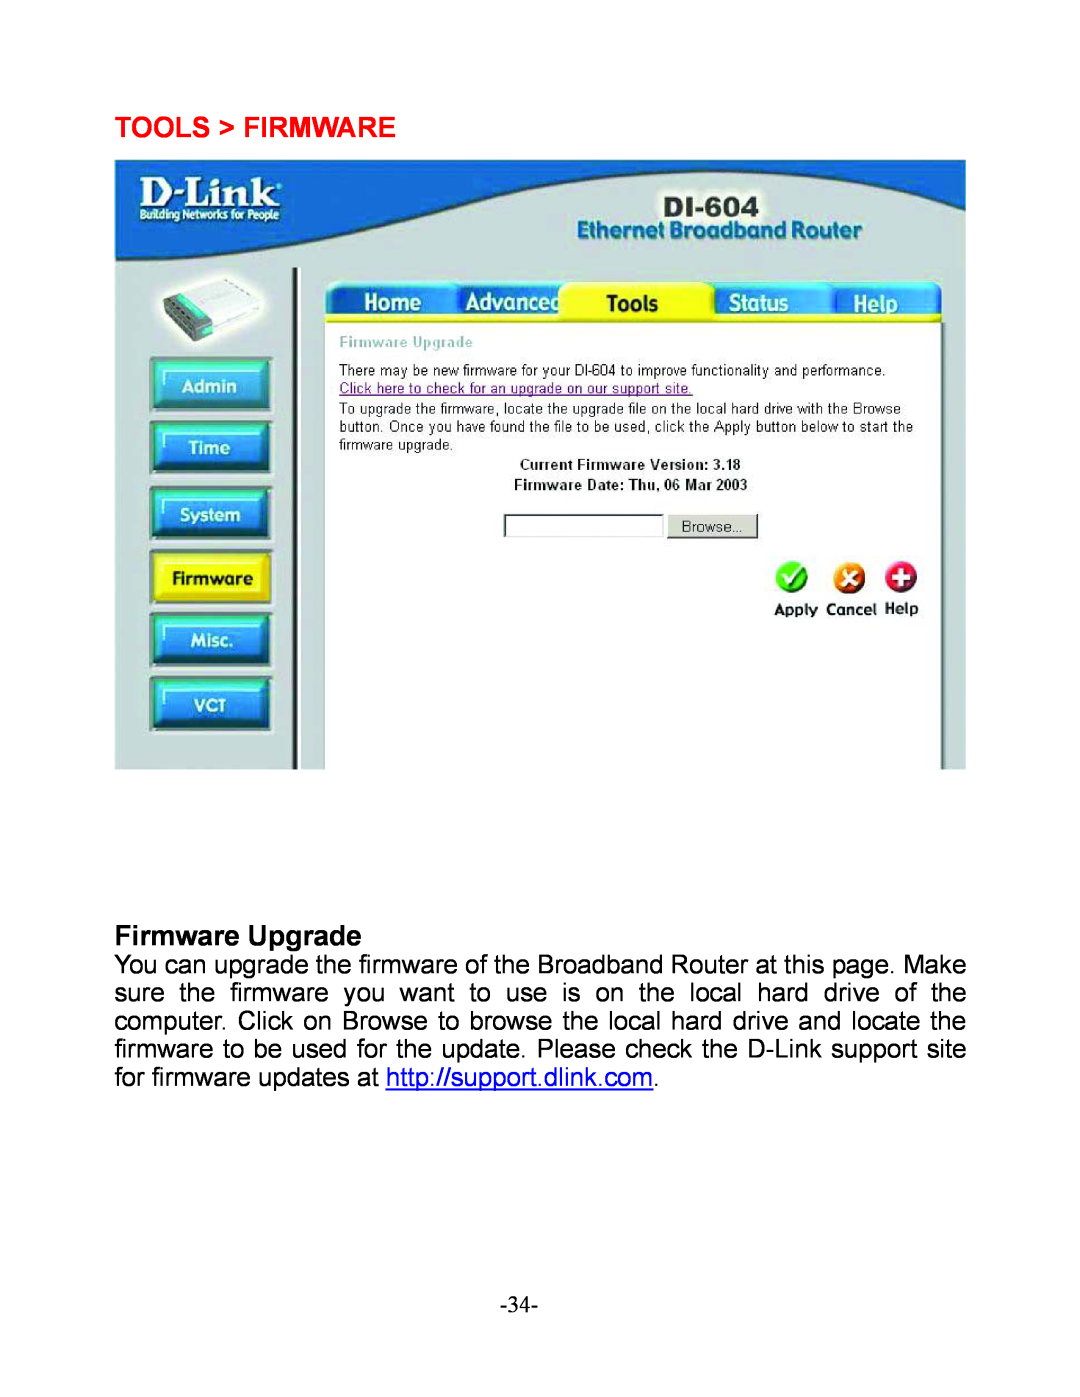 D-Link DI-604 manual Tools Firmware, Firmware Upgrade 